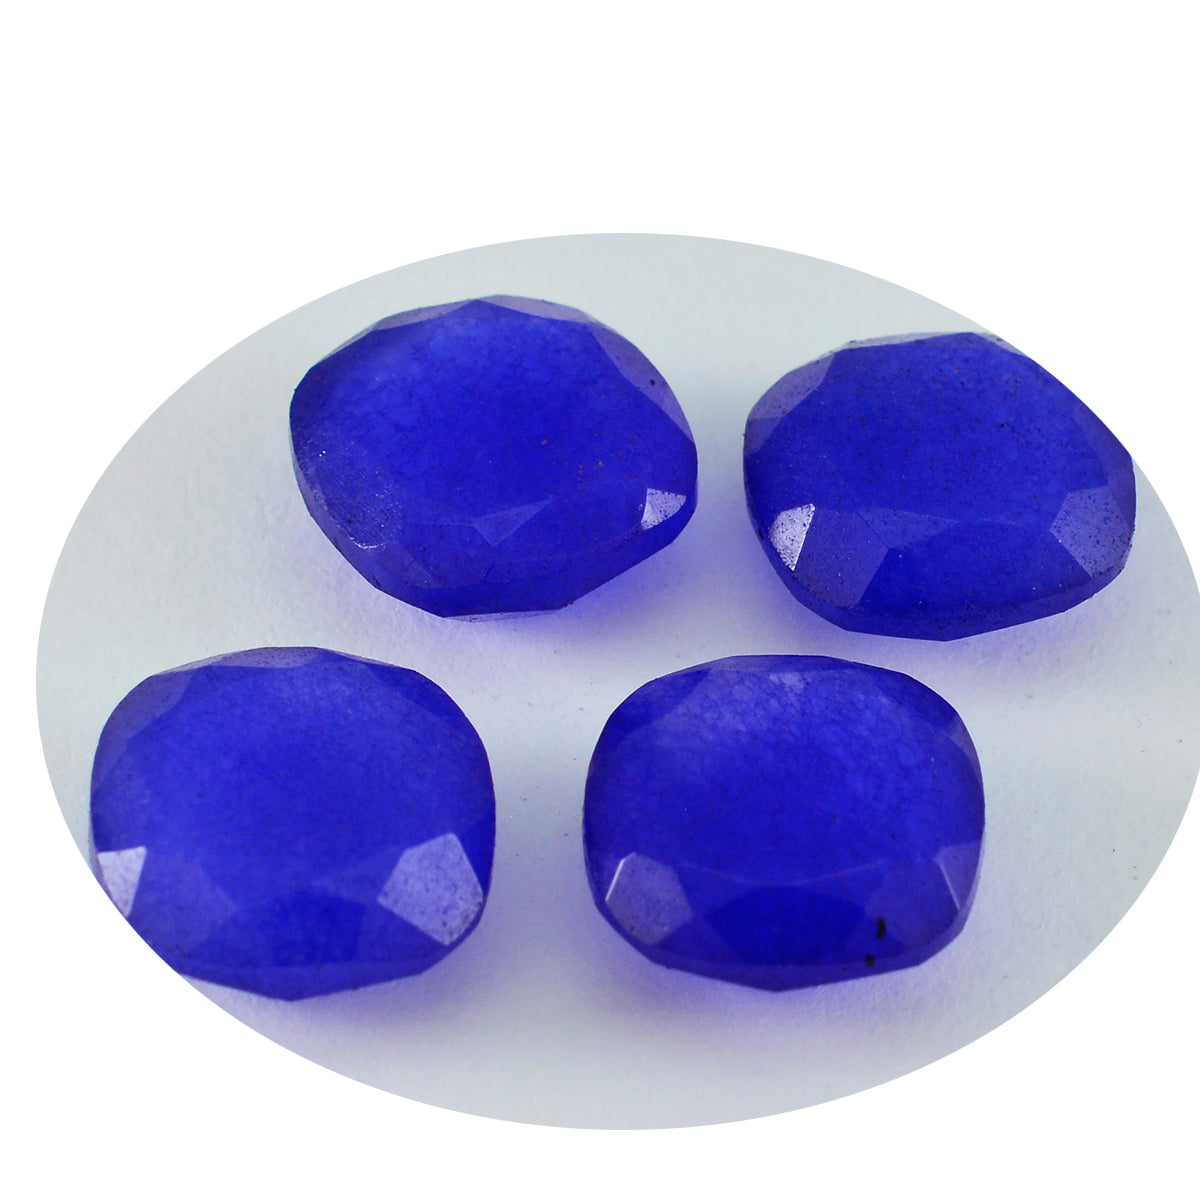 Riyogems 1PC Natural Blue Jasper Faceted 10x10 mm Cushion Shape A+1 Quality Loose Gemstone